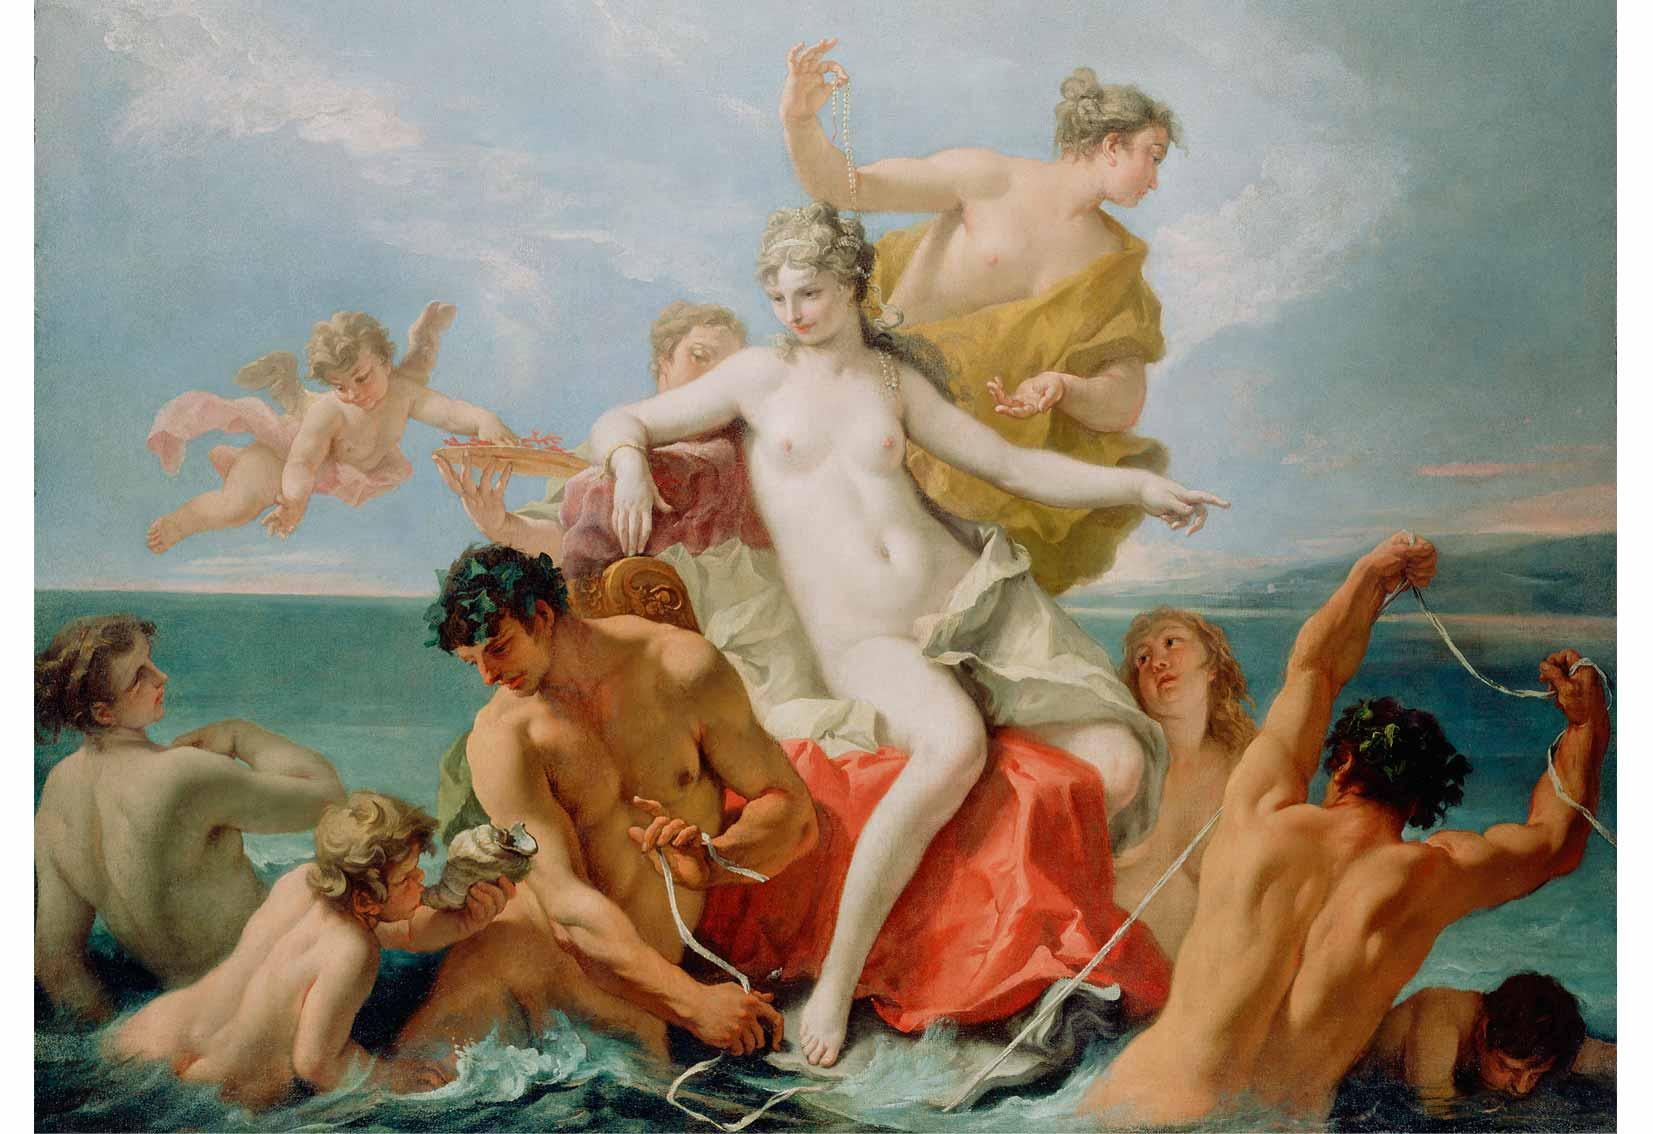 Sebastiano Ricci, Triumph of the Marine Venus, c. 1713.